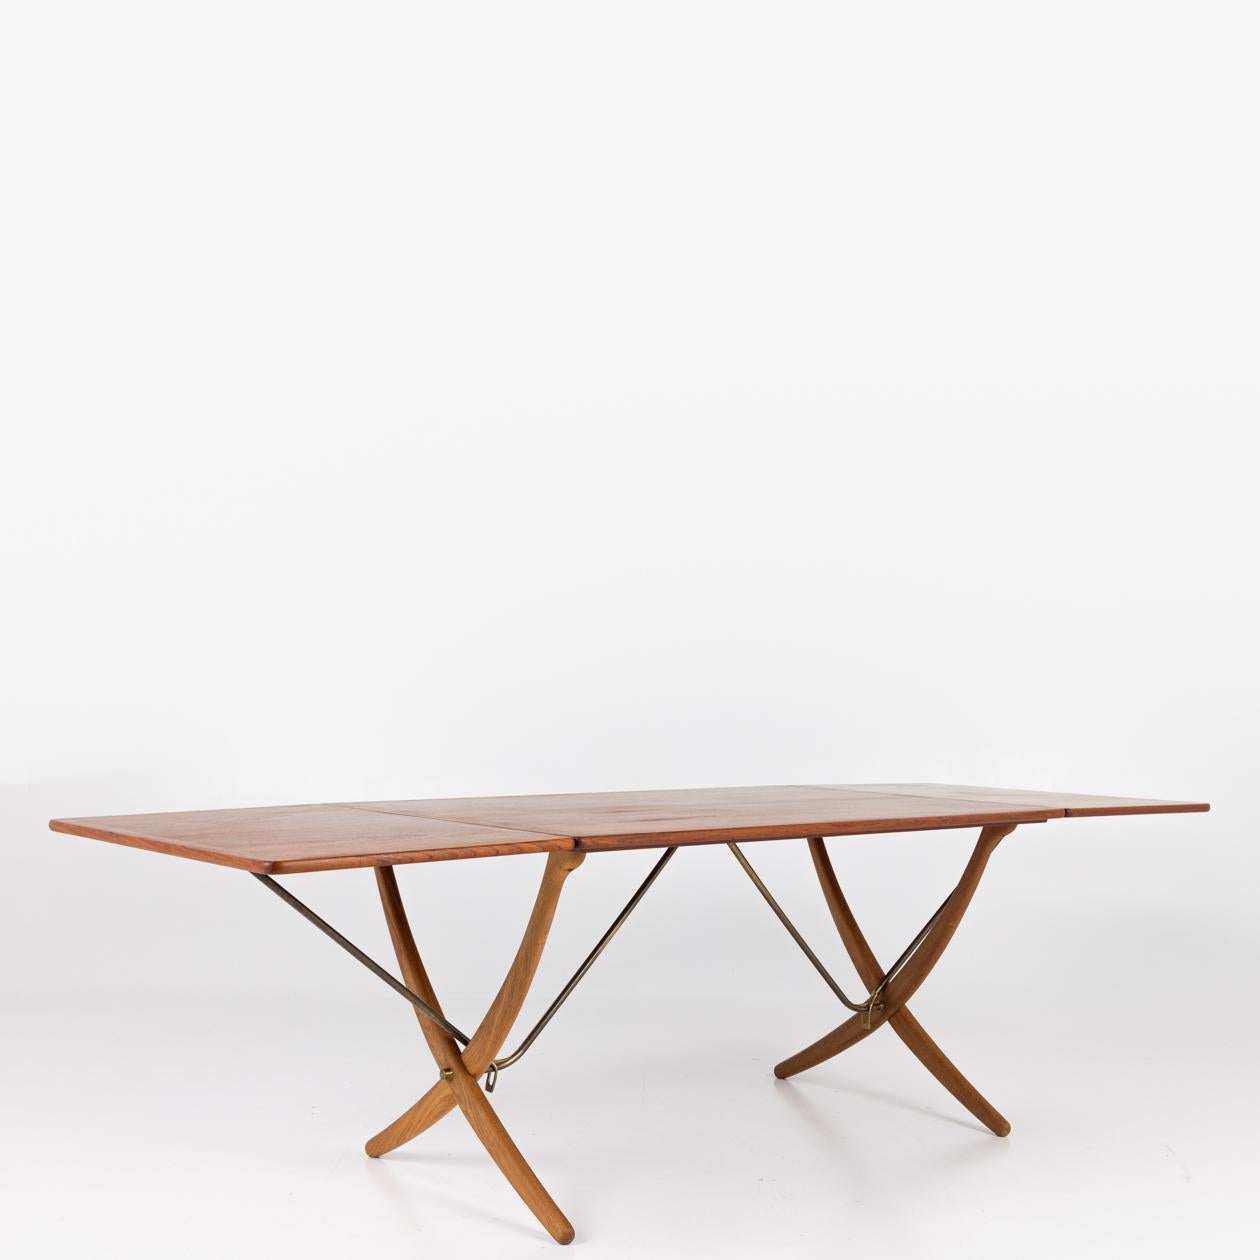 Danish AT 304 - Sabre-legged table by Hans J. Wegner